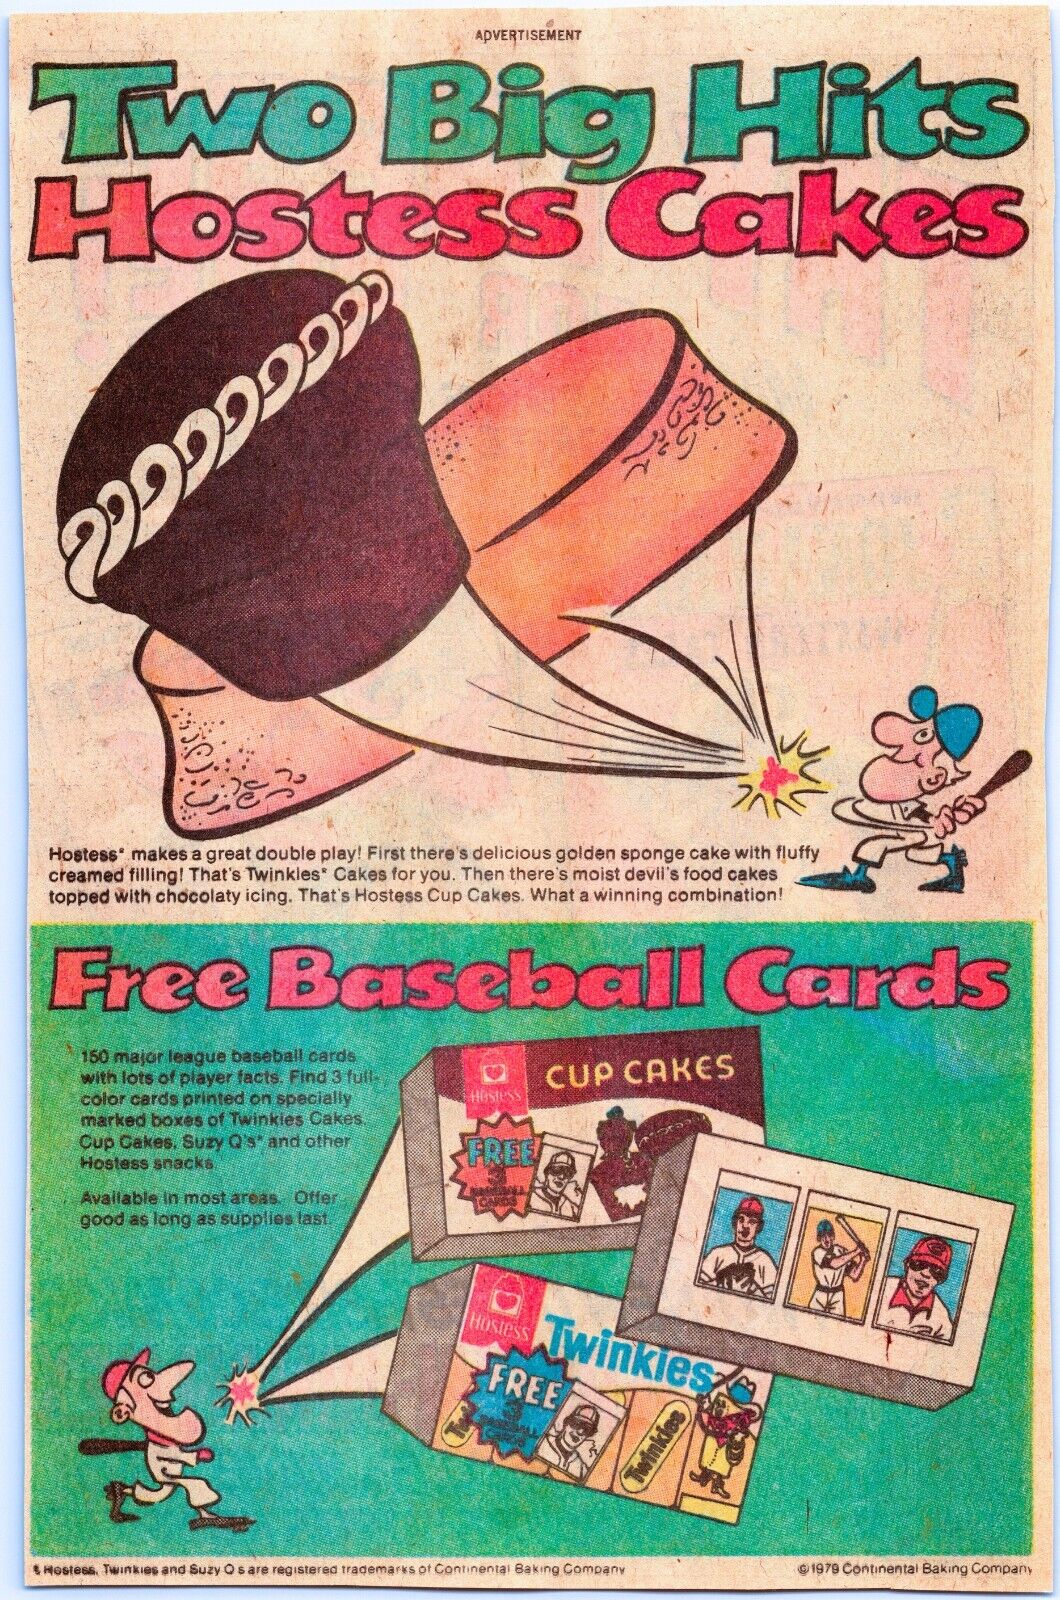 VINTAGE PRINT ADVERTISING HOSTESS Twinkies Cupcakes and Baseball Cards - 1979